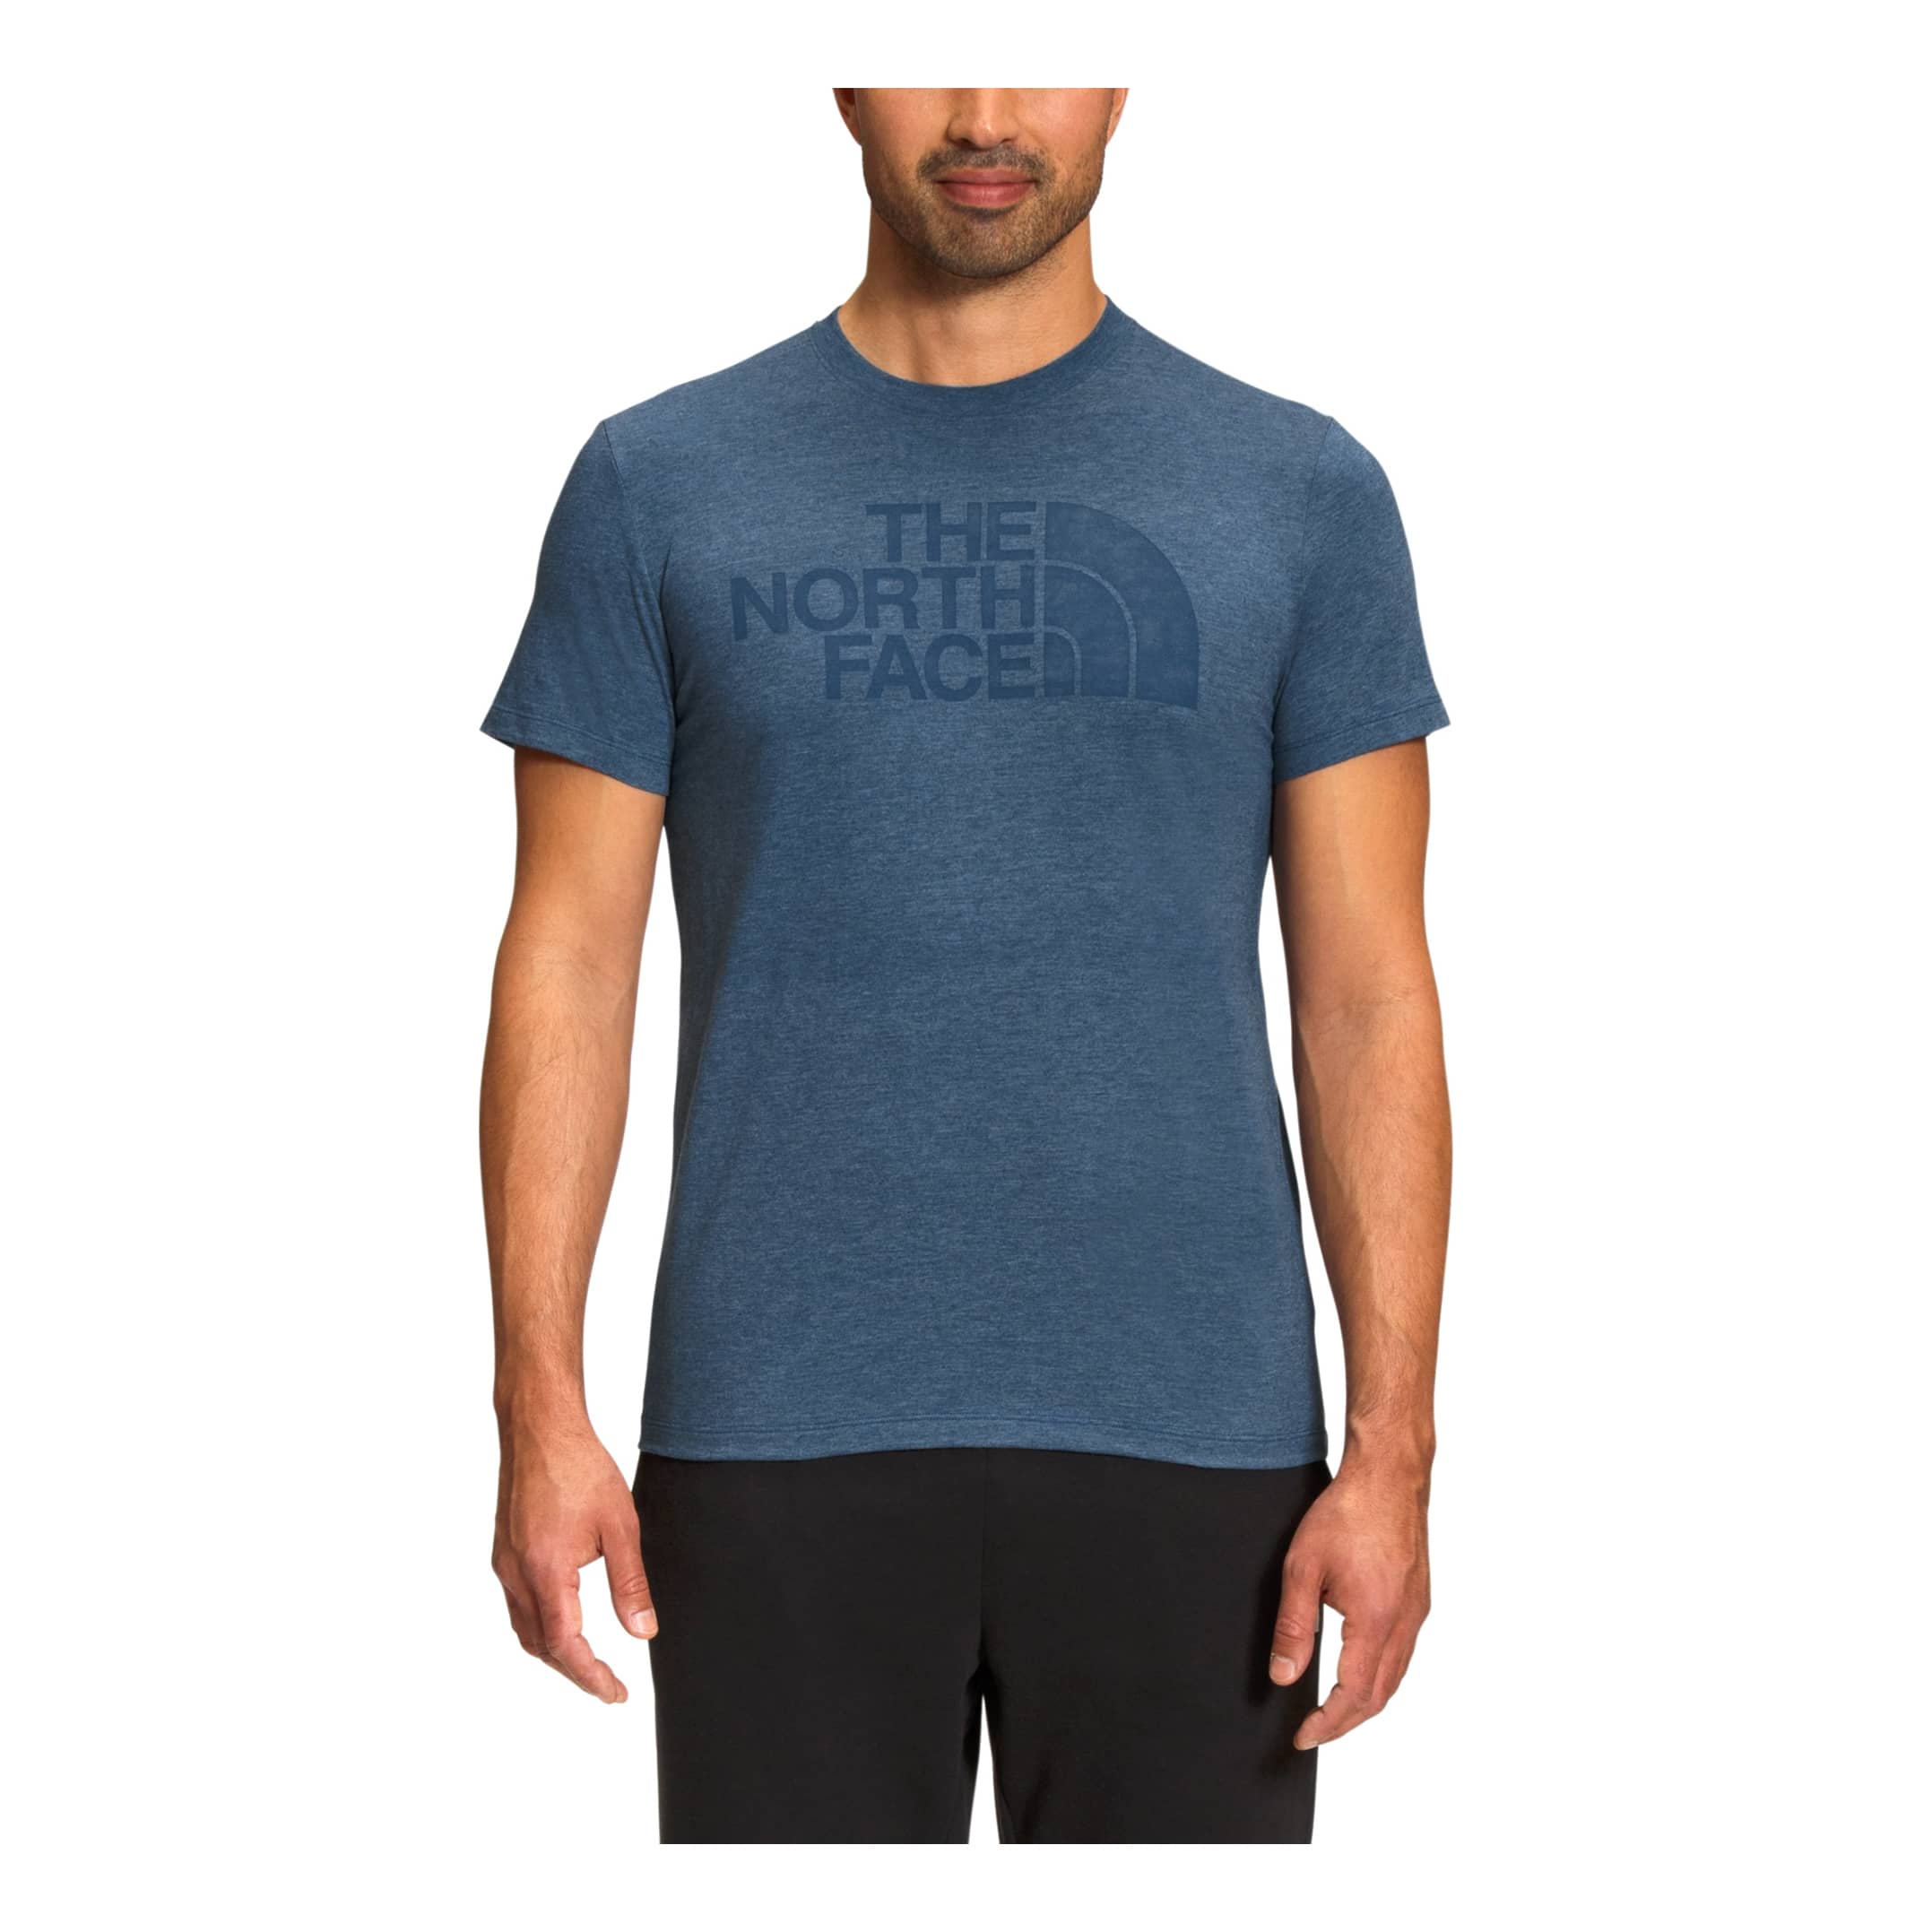 The North Face Men's Wander Short Sleeve T-Shirt